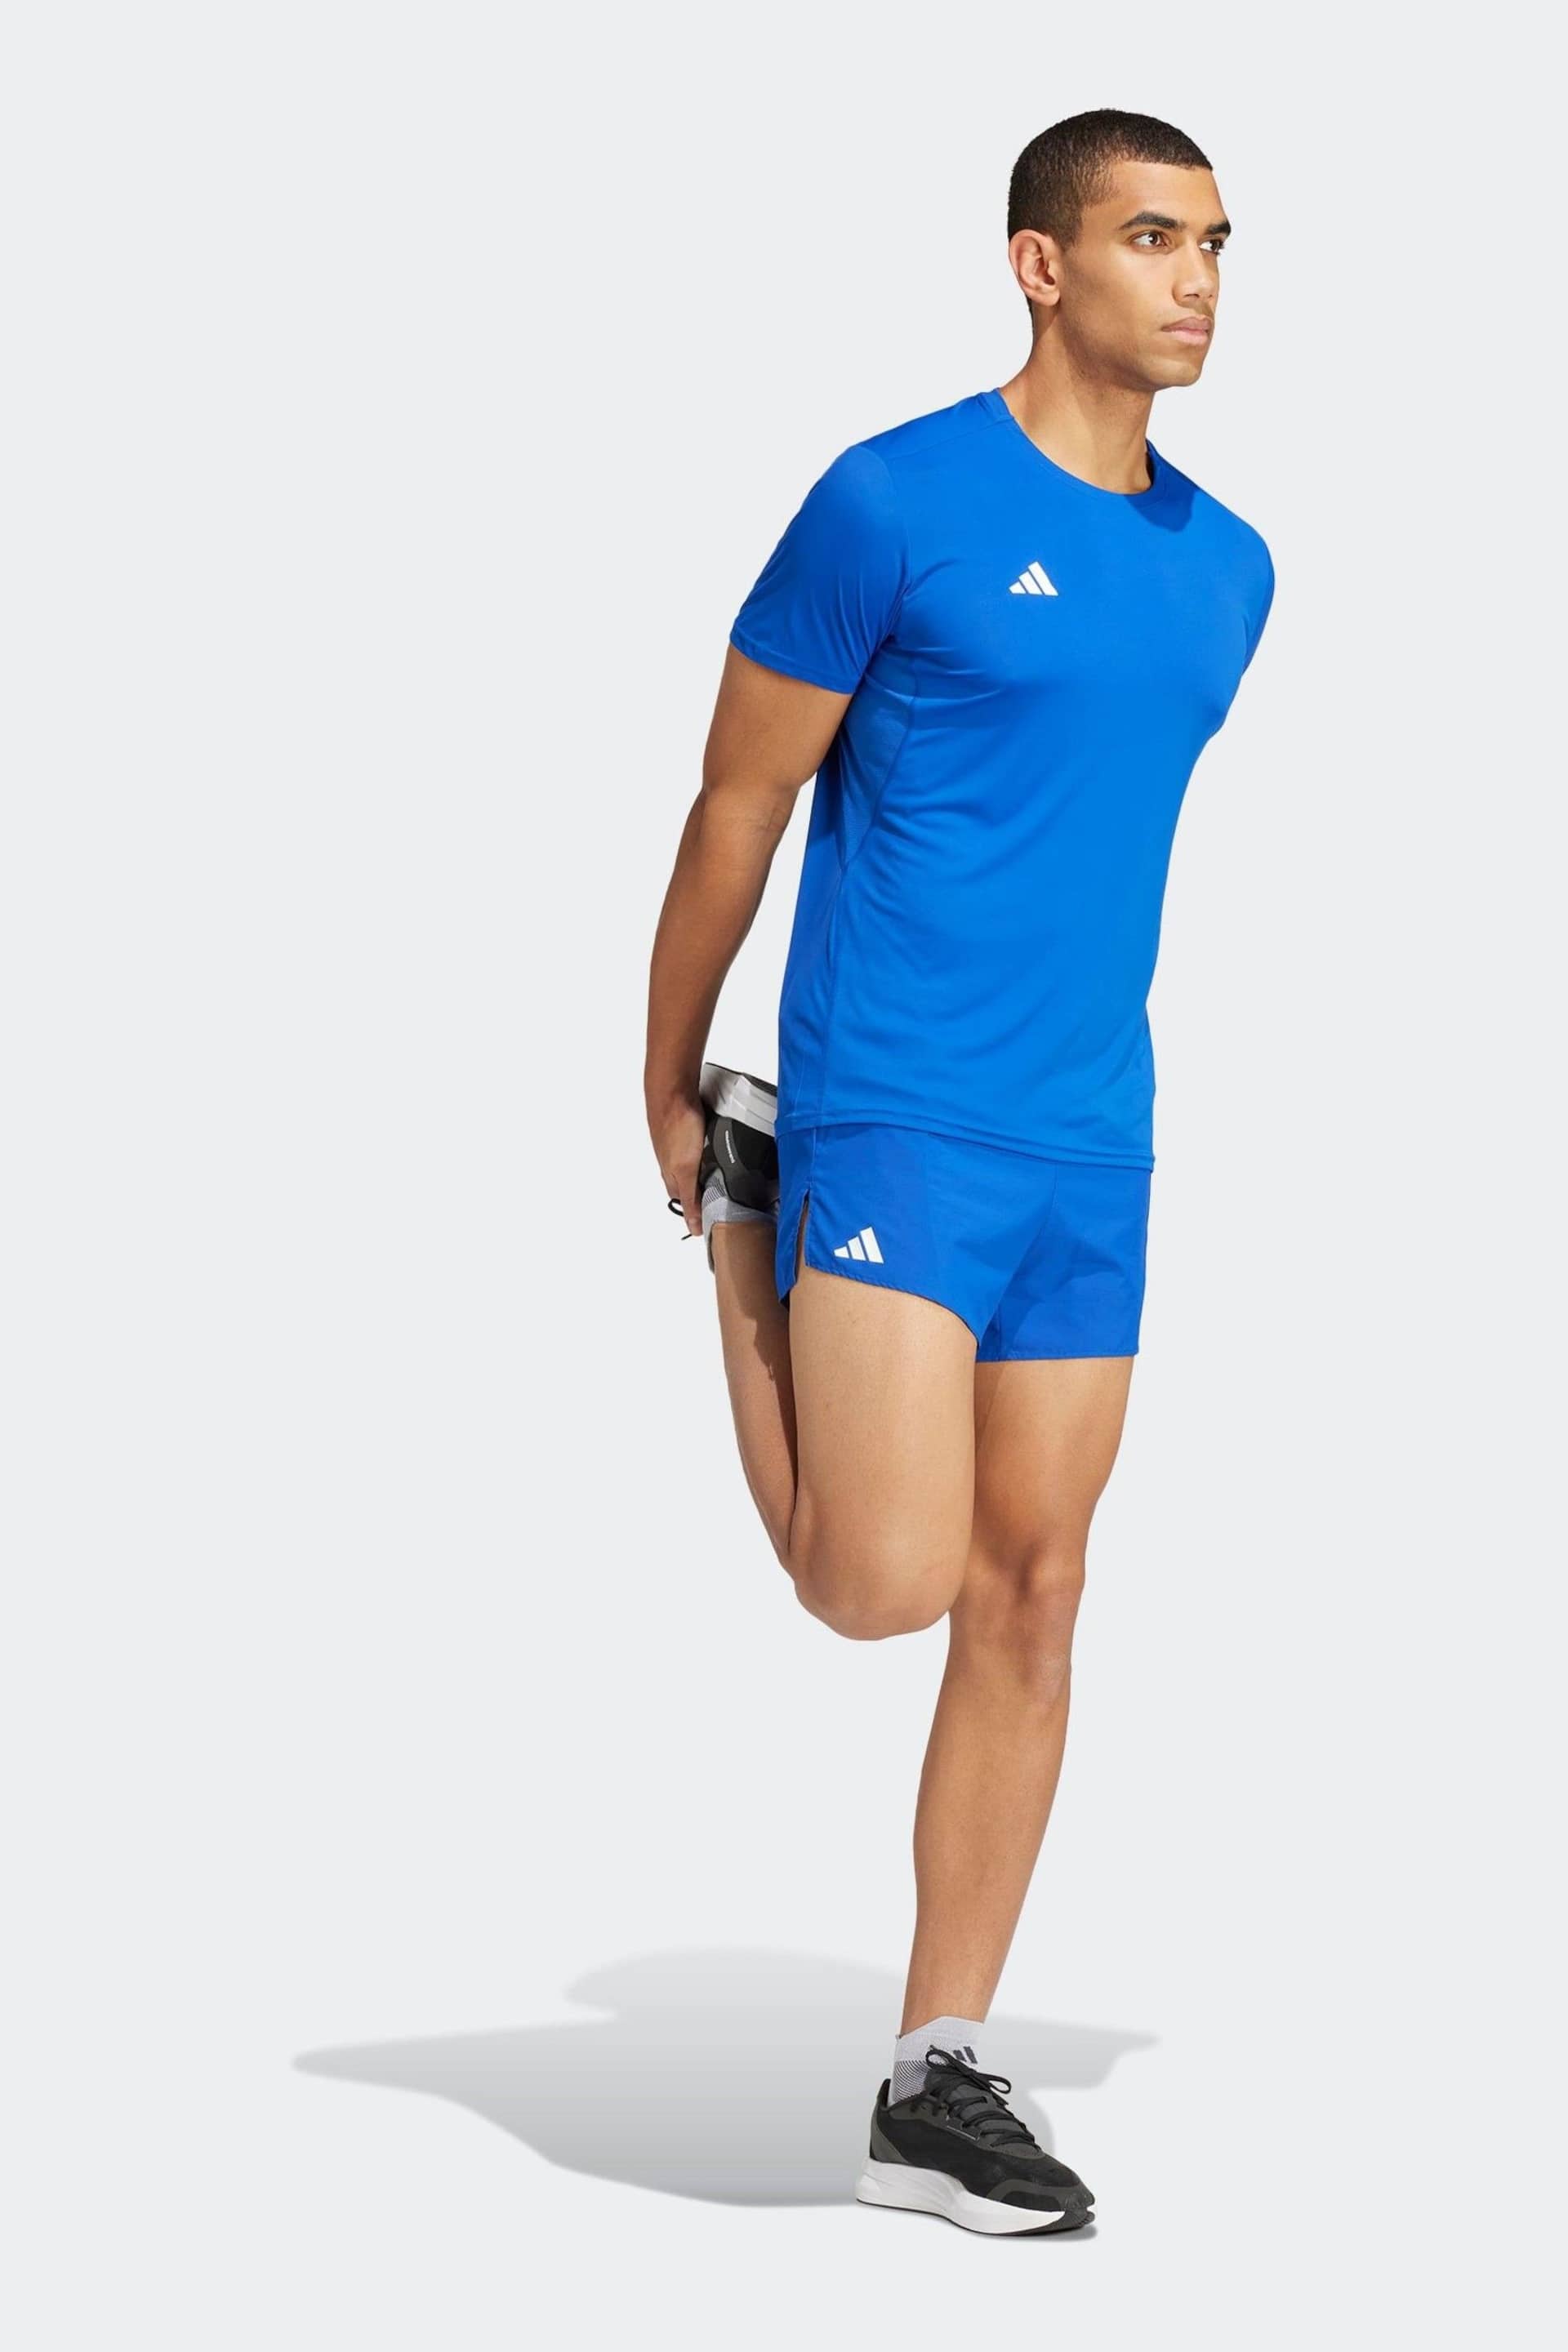 adidas Bright Blue Adizero Essentials Running T-Shirt - Image 4 of 17